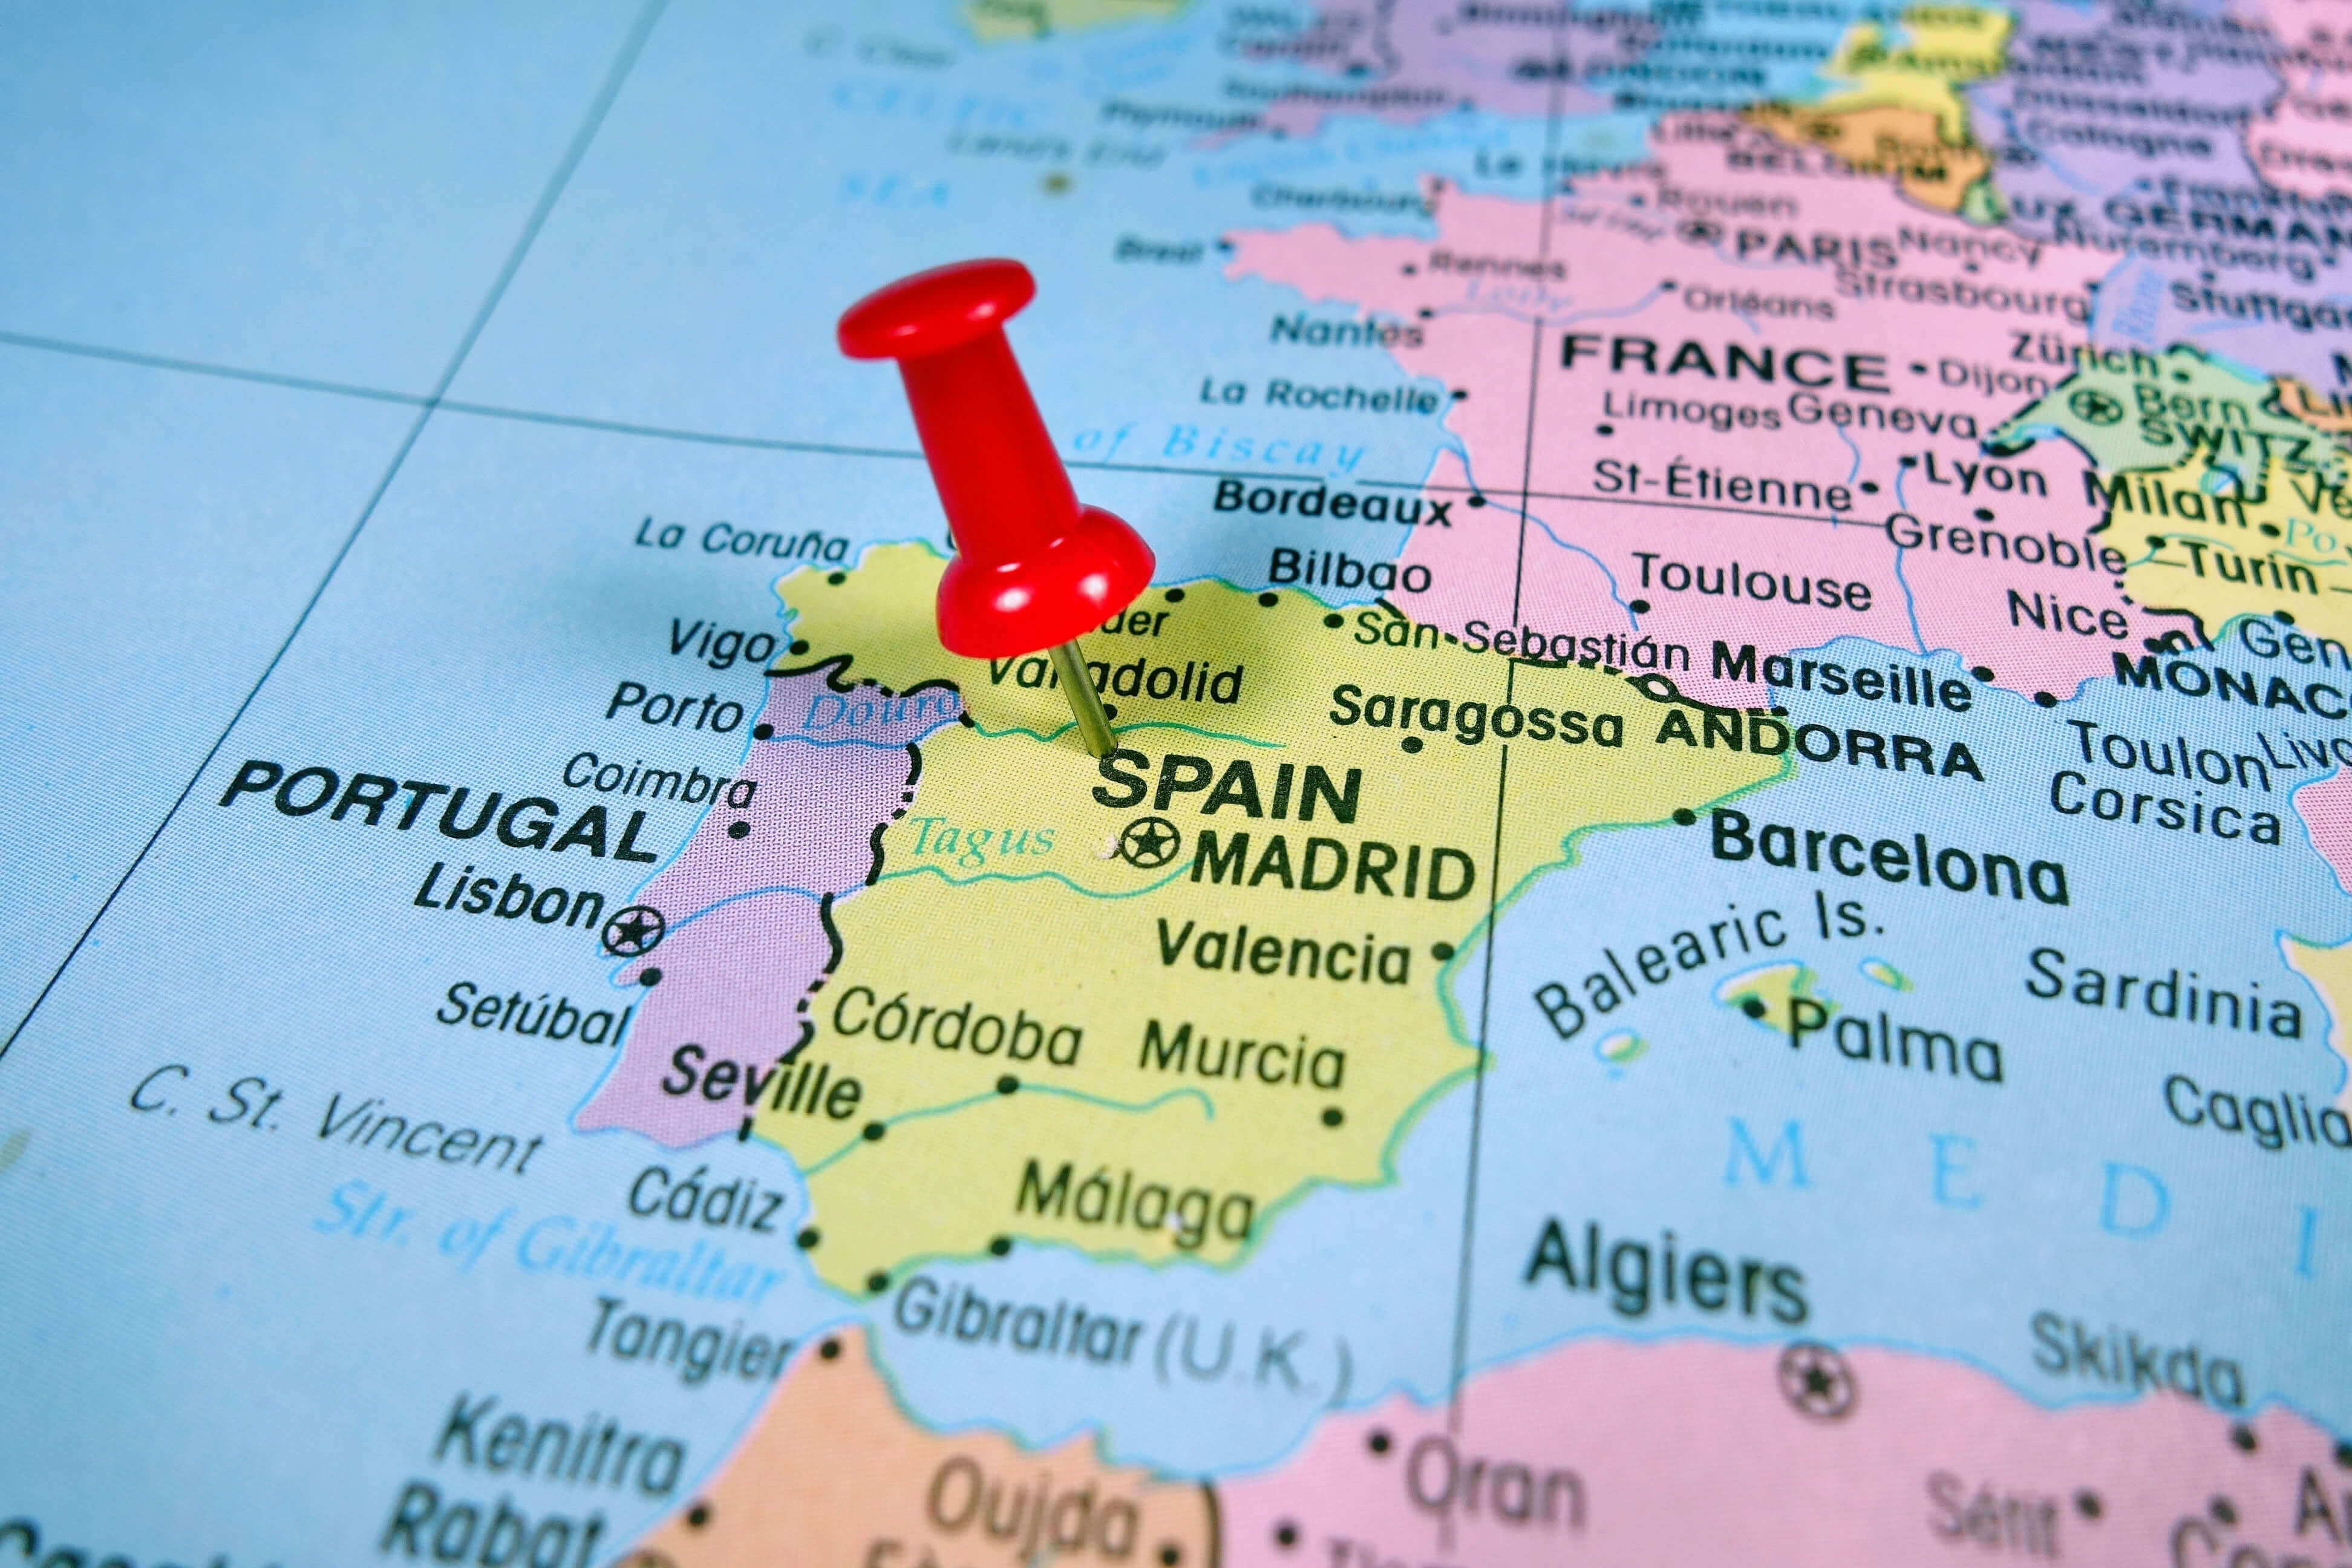 Pushpin marking on Spain map